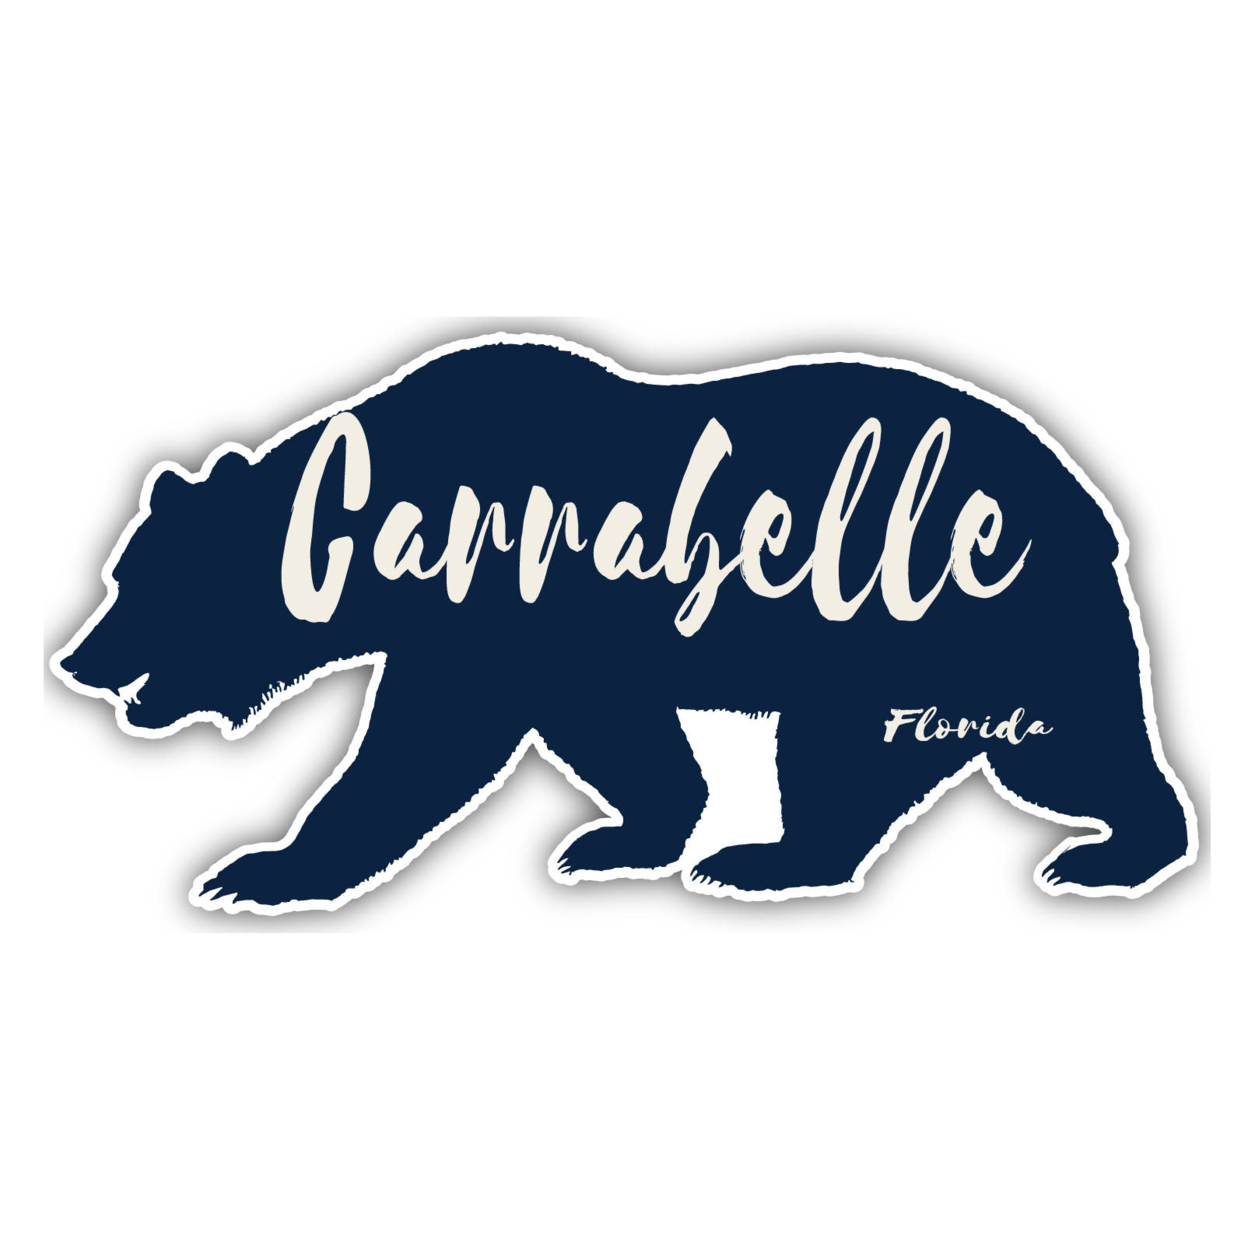 Carrabelle Florida Souvenir Decorative Stickers (Choose Theme And Size) - Single Unit, 2-Inch, Bear